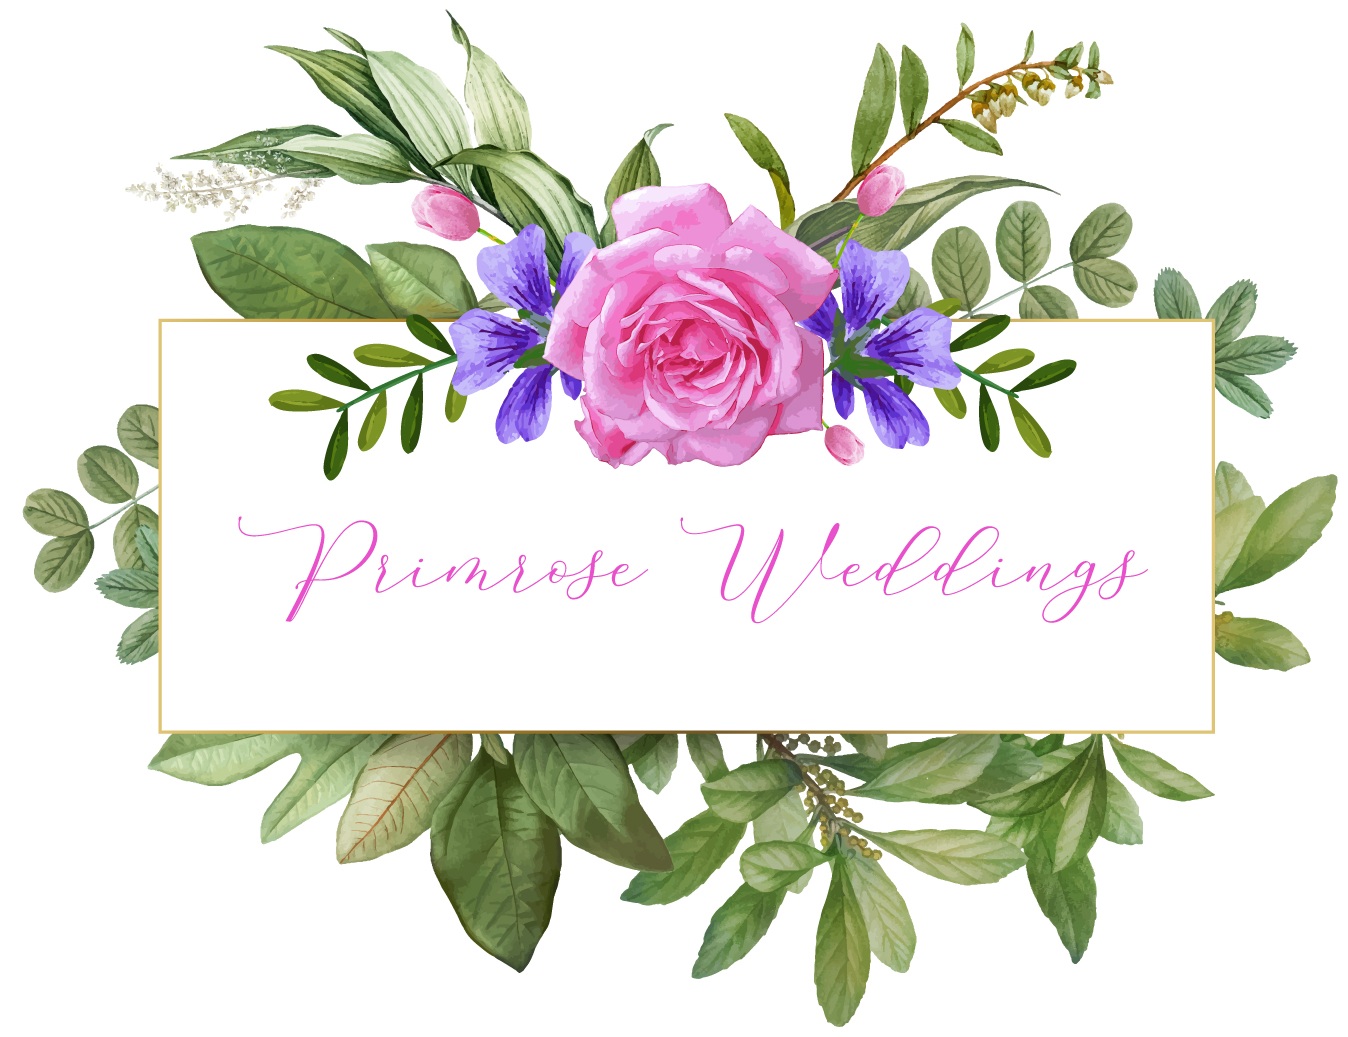 Primrose Weddings